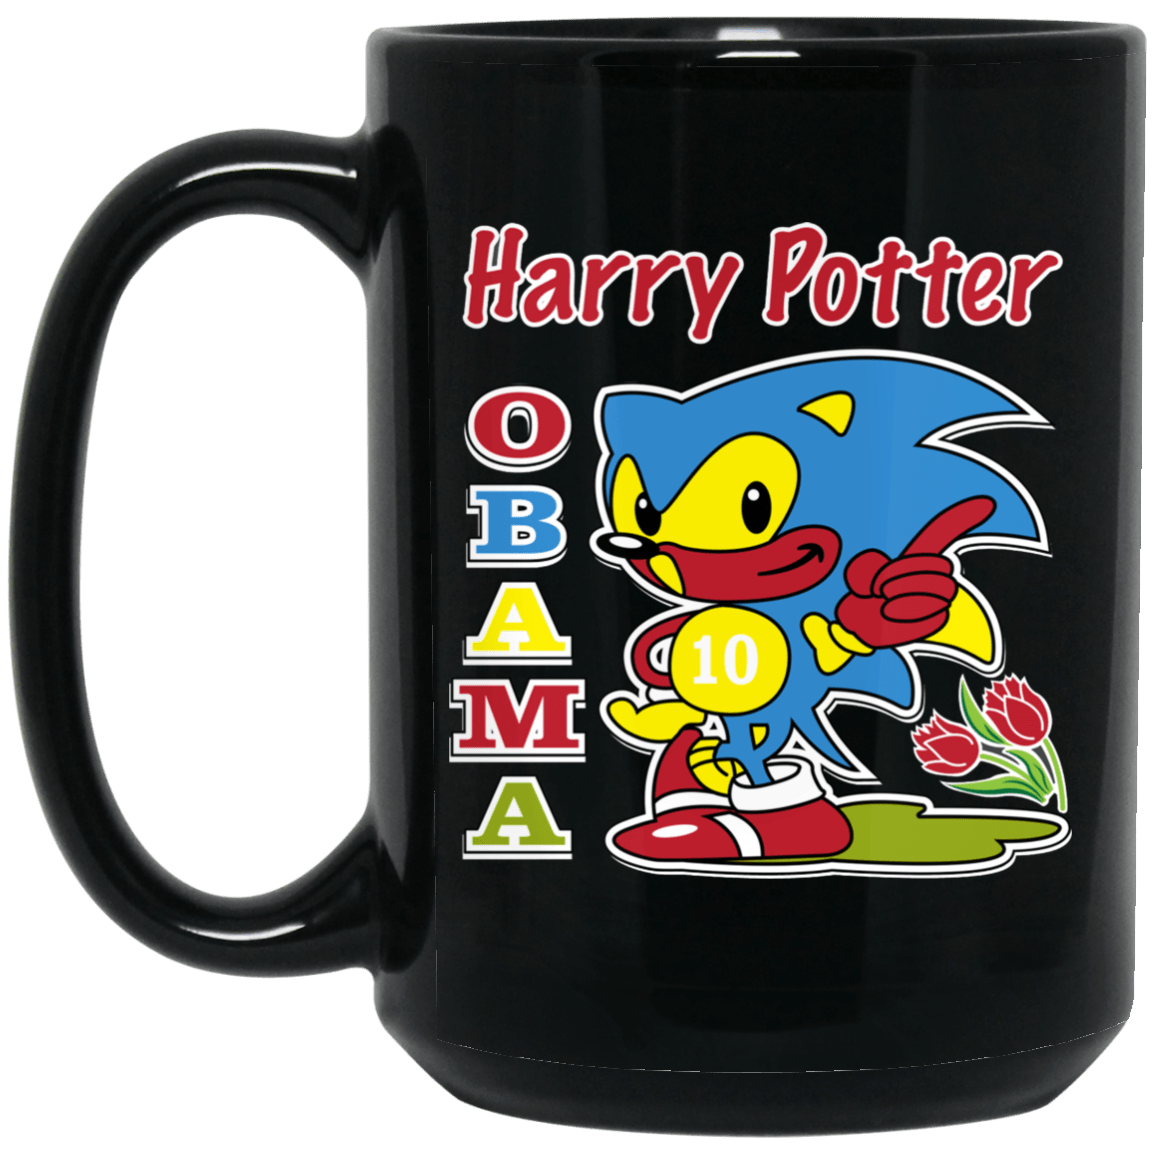 Harry Potter Obama Sonic Version Mug